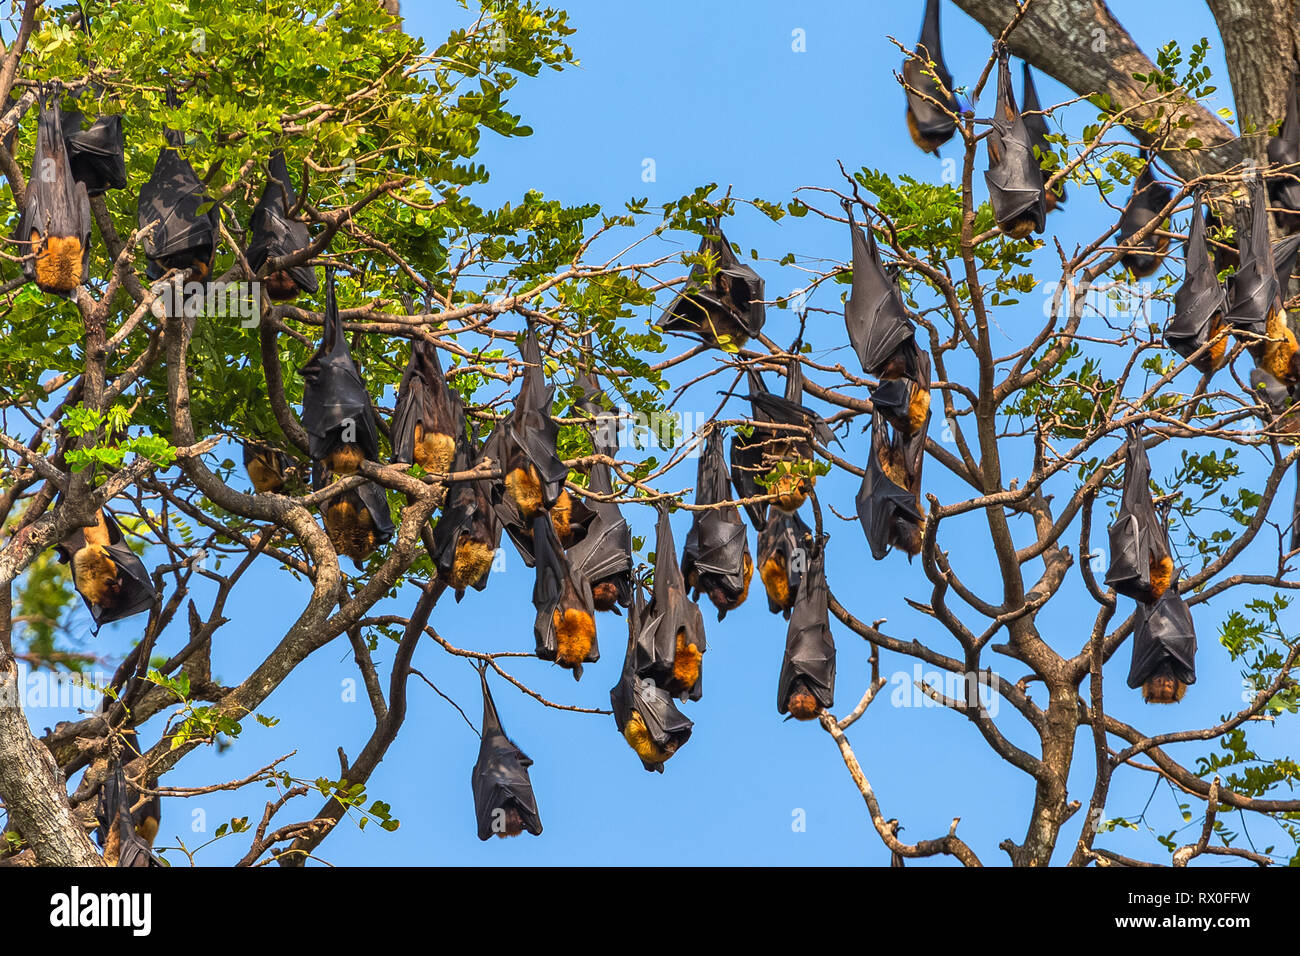 Obst bat Bäume (Flying Fox). Horezu, Sri Lanka. Stockfoto